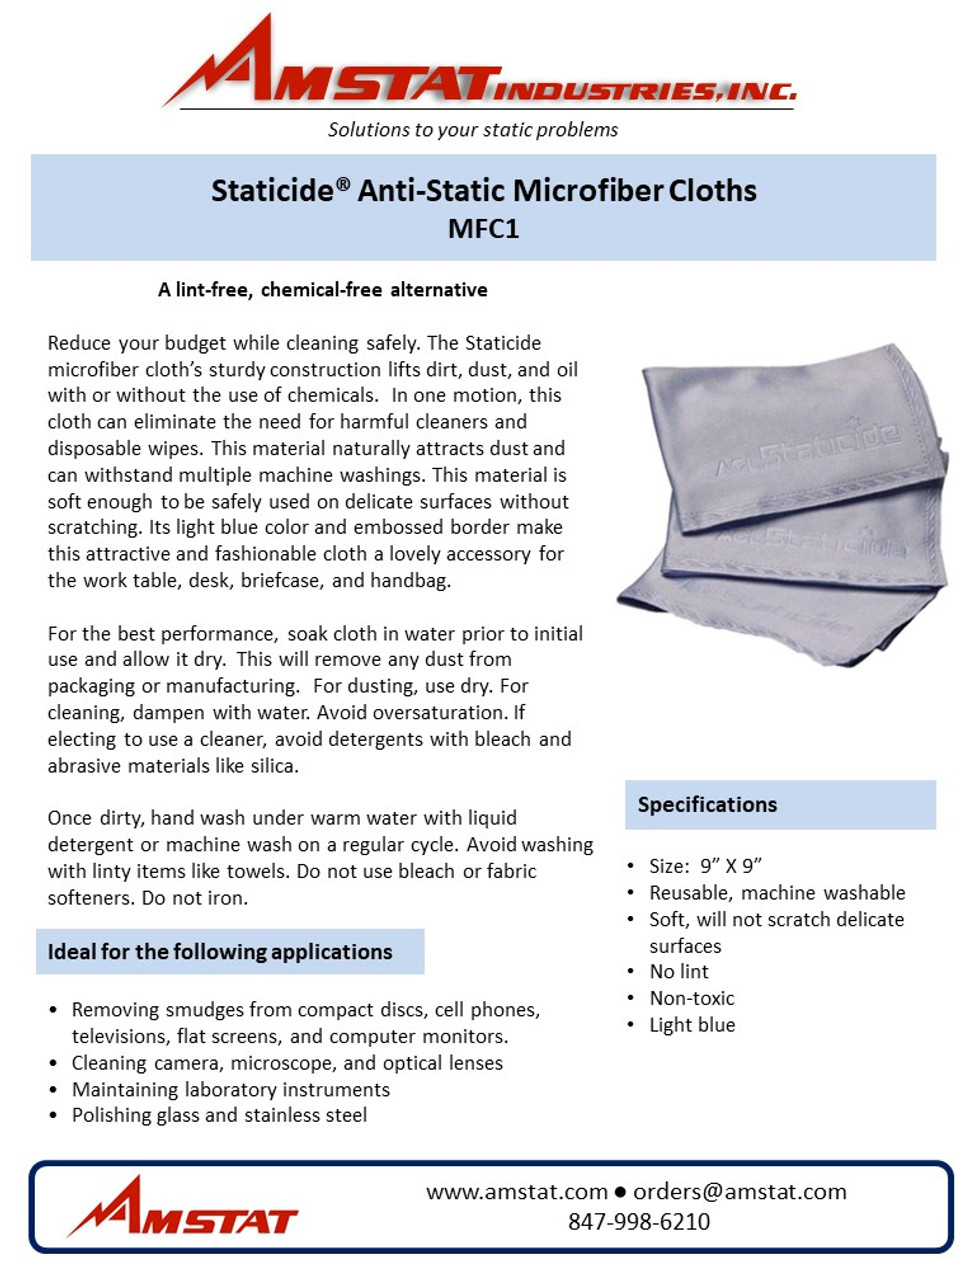 Staticide Microfiber Cloth